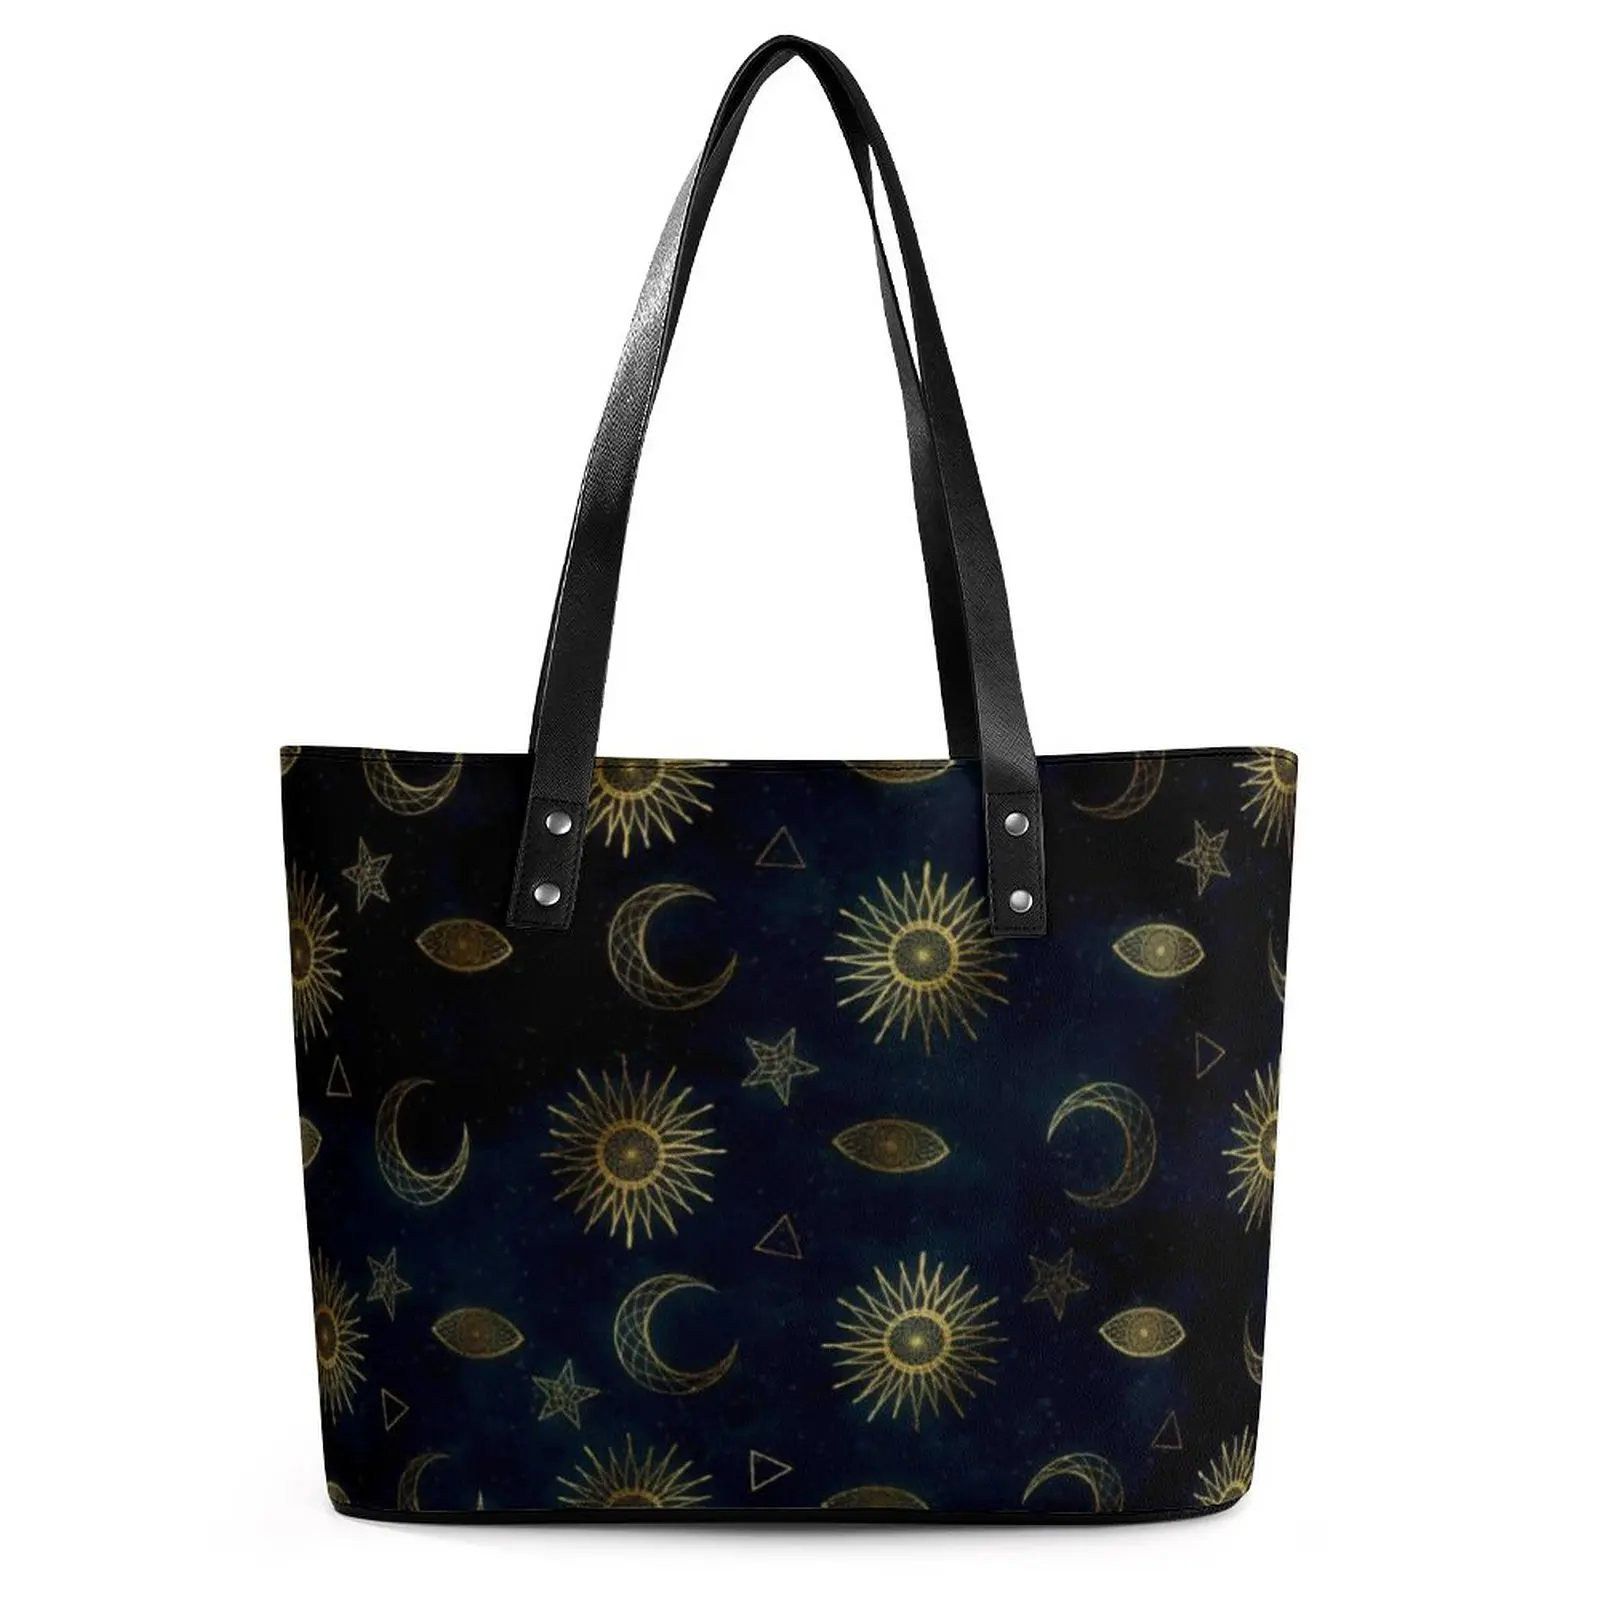 

Magical Symbol Handbags Gold Moon Sun Stars Travel Tote Bag Women Funny Shoulder Bag Graphic Pocket PU Leather Shopping Bags